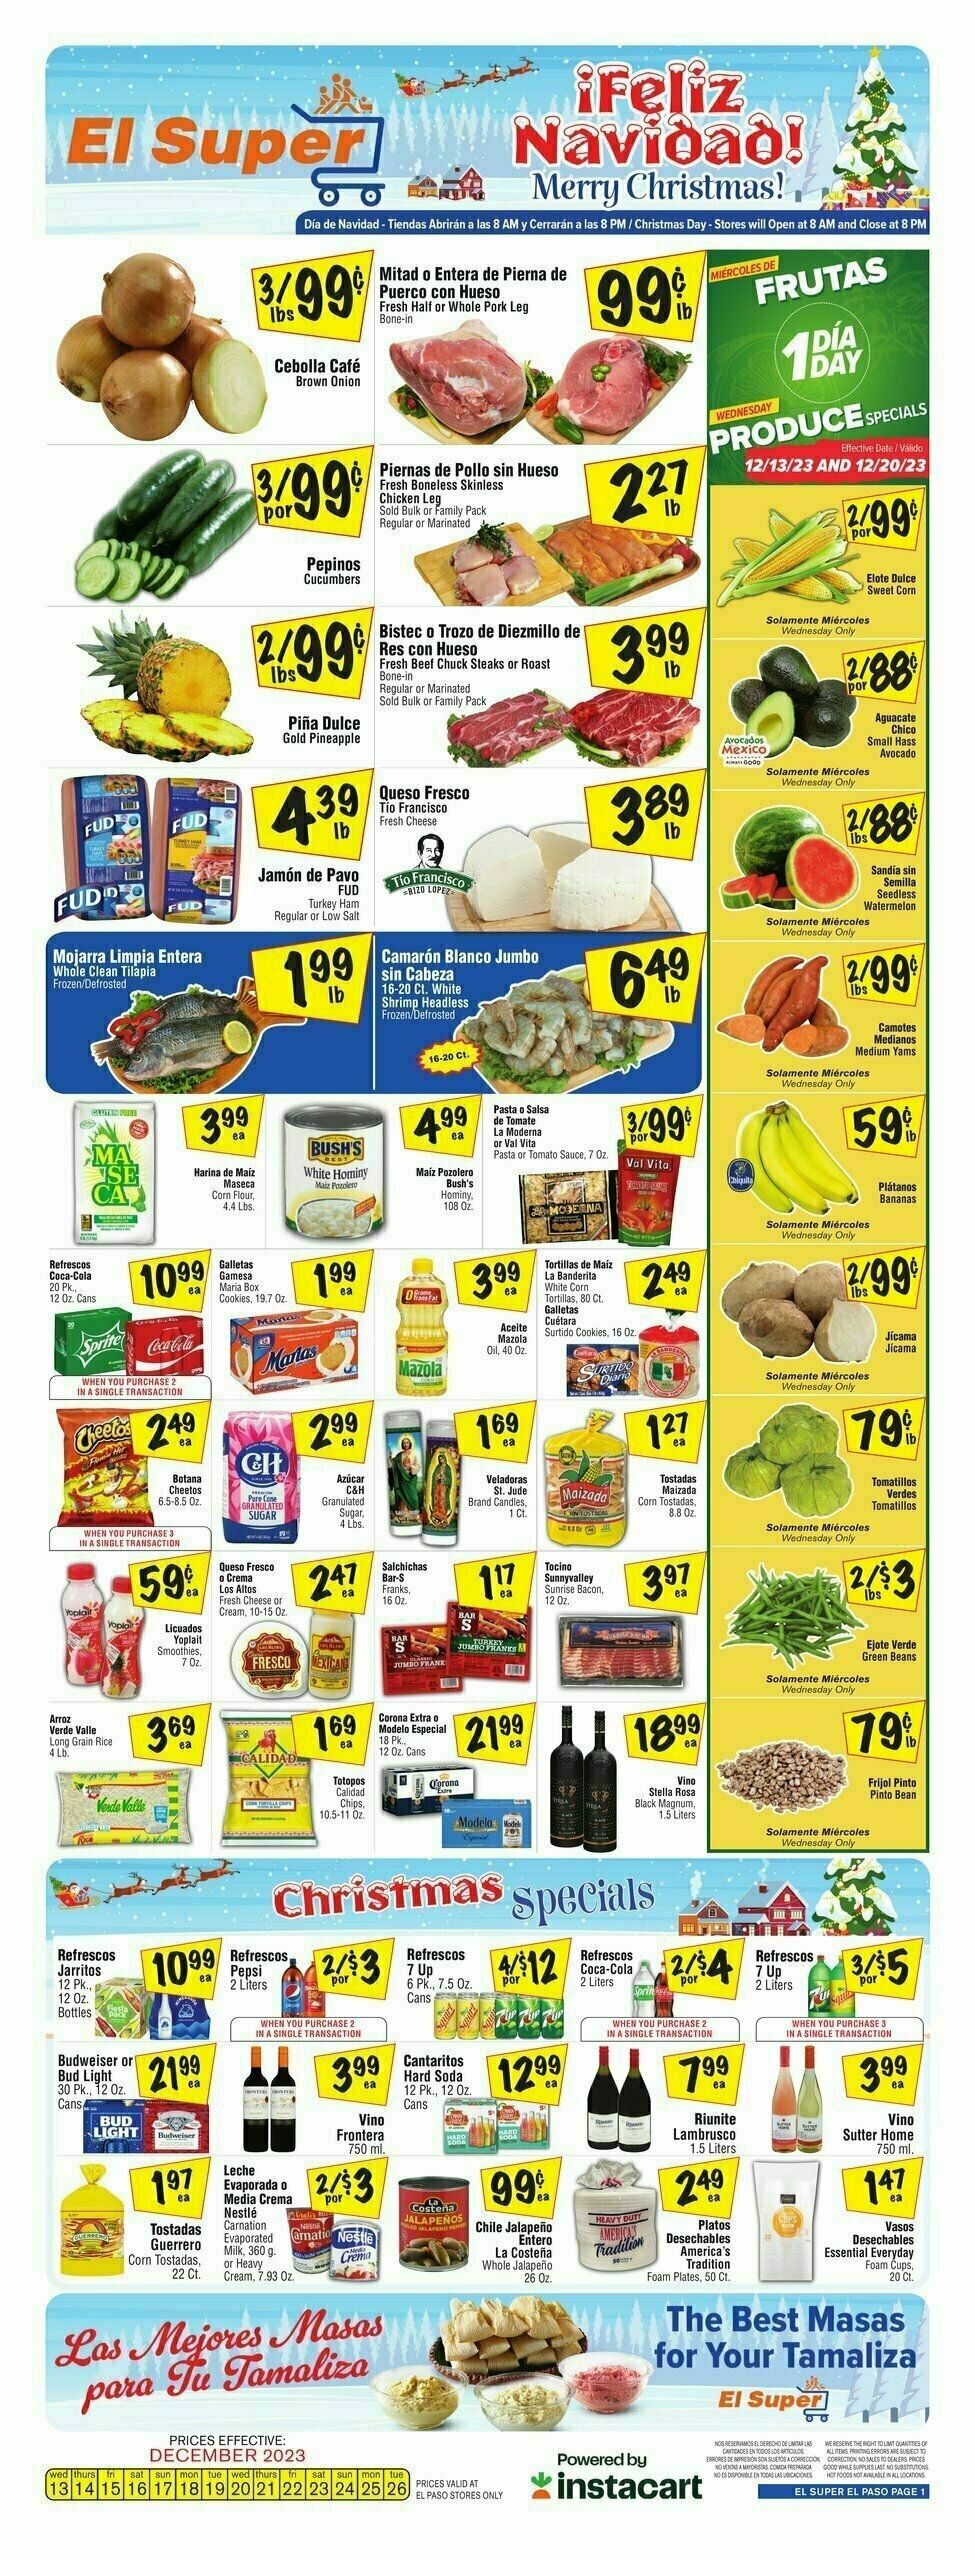 El Super Markets Weekly Ad from December 13